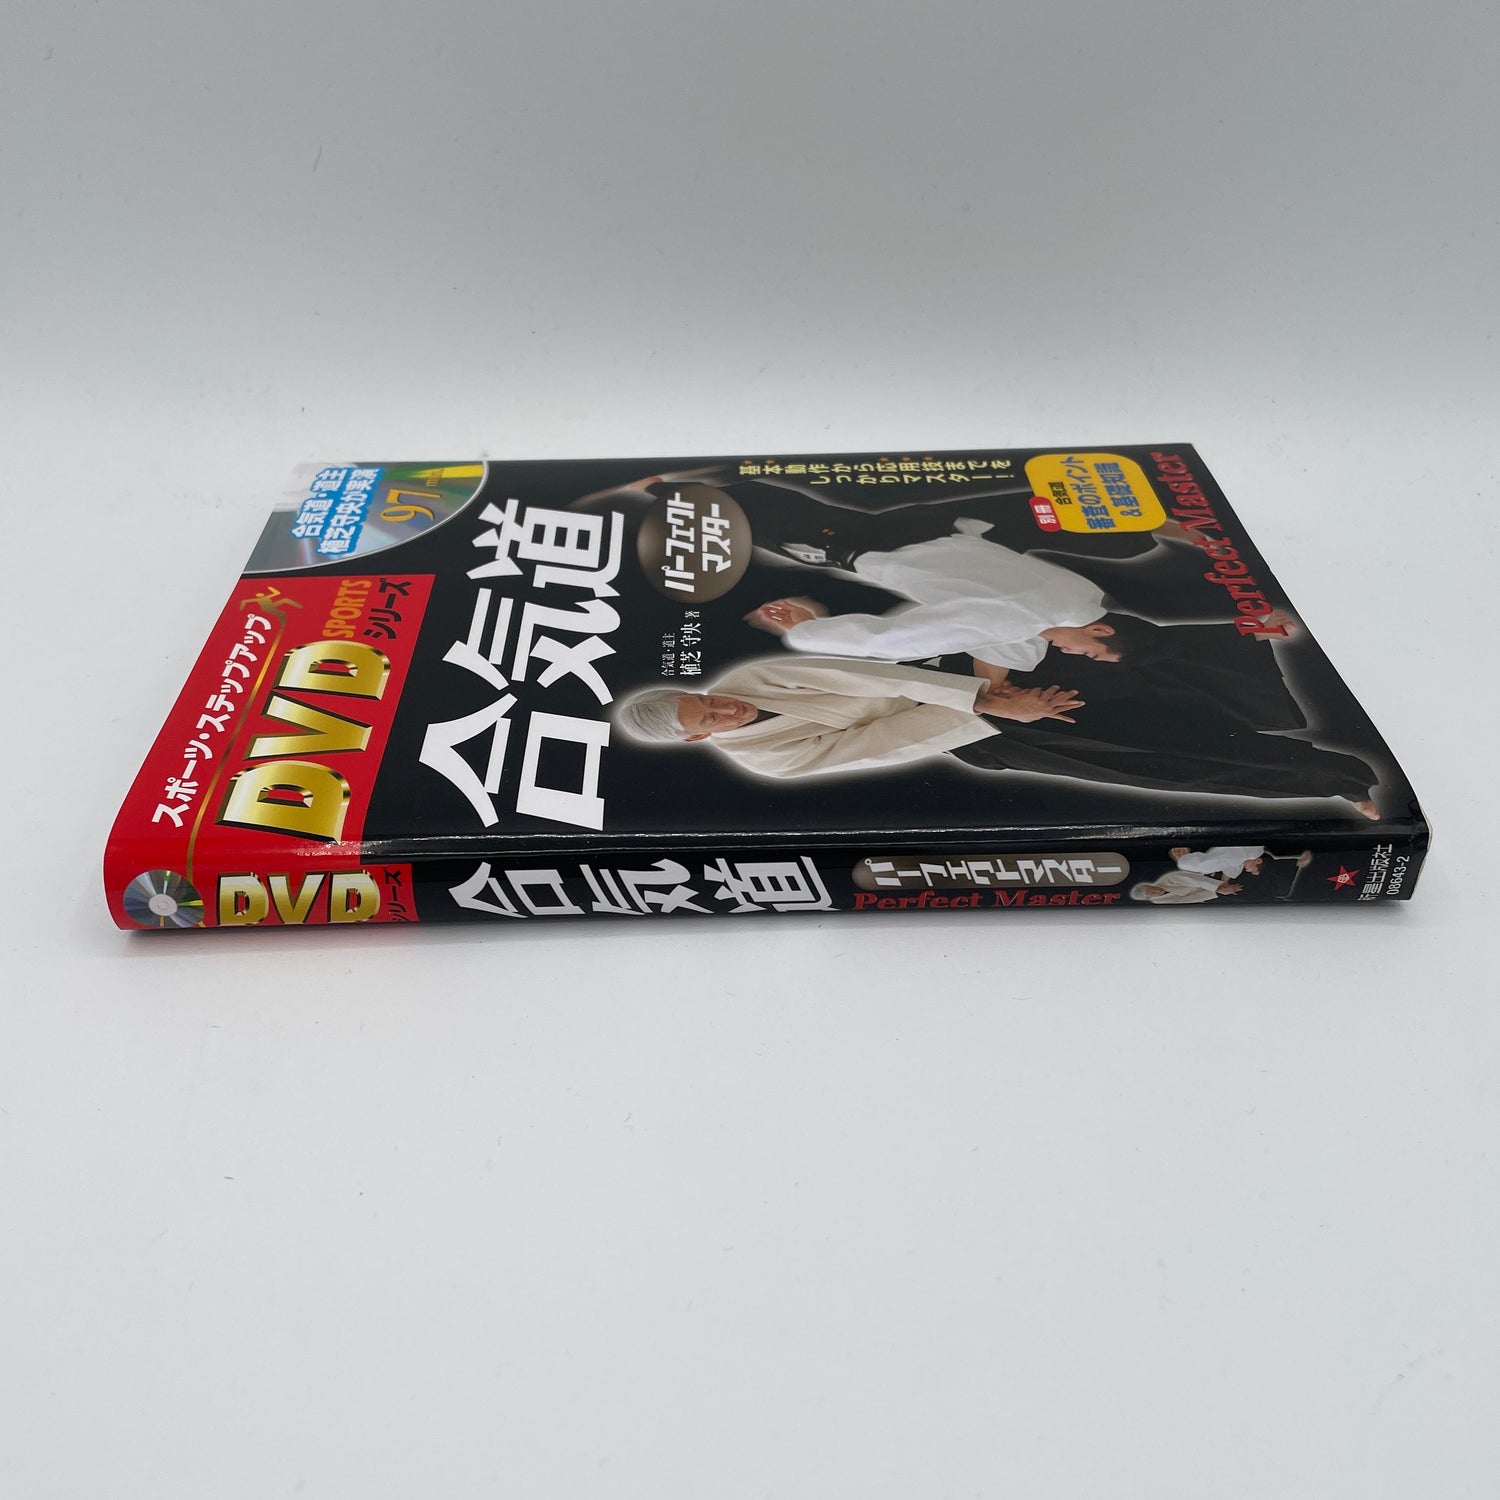 Aikido Perfect Mastery Book & DVD by Moriteru Ueshiba (Preowned)